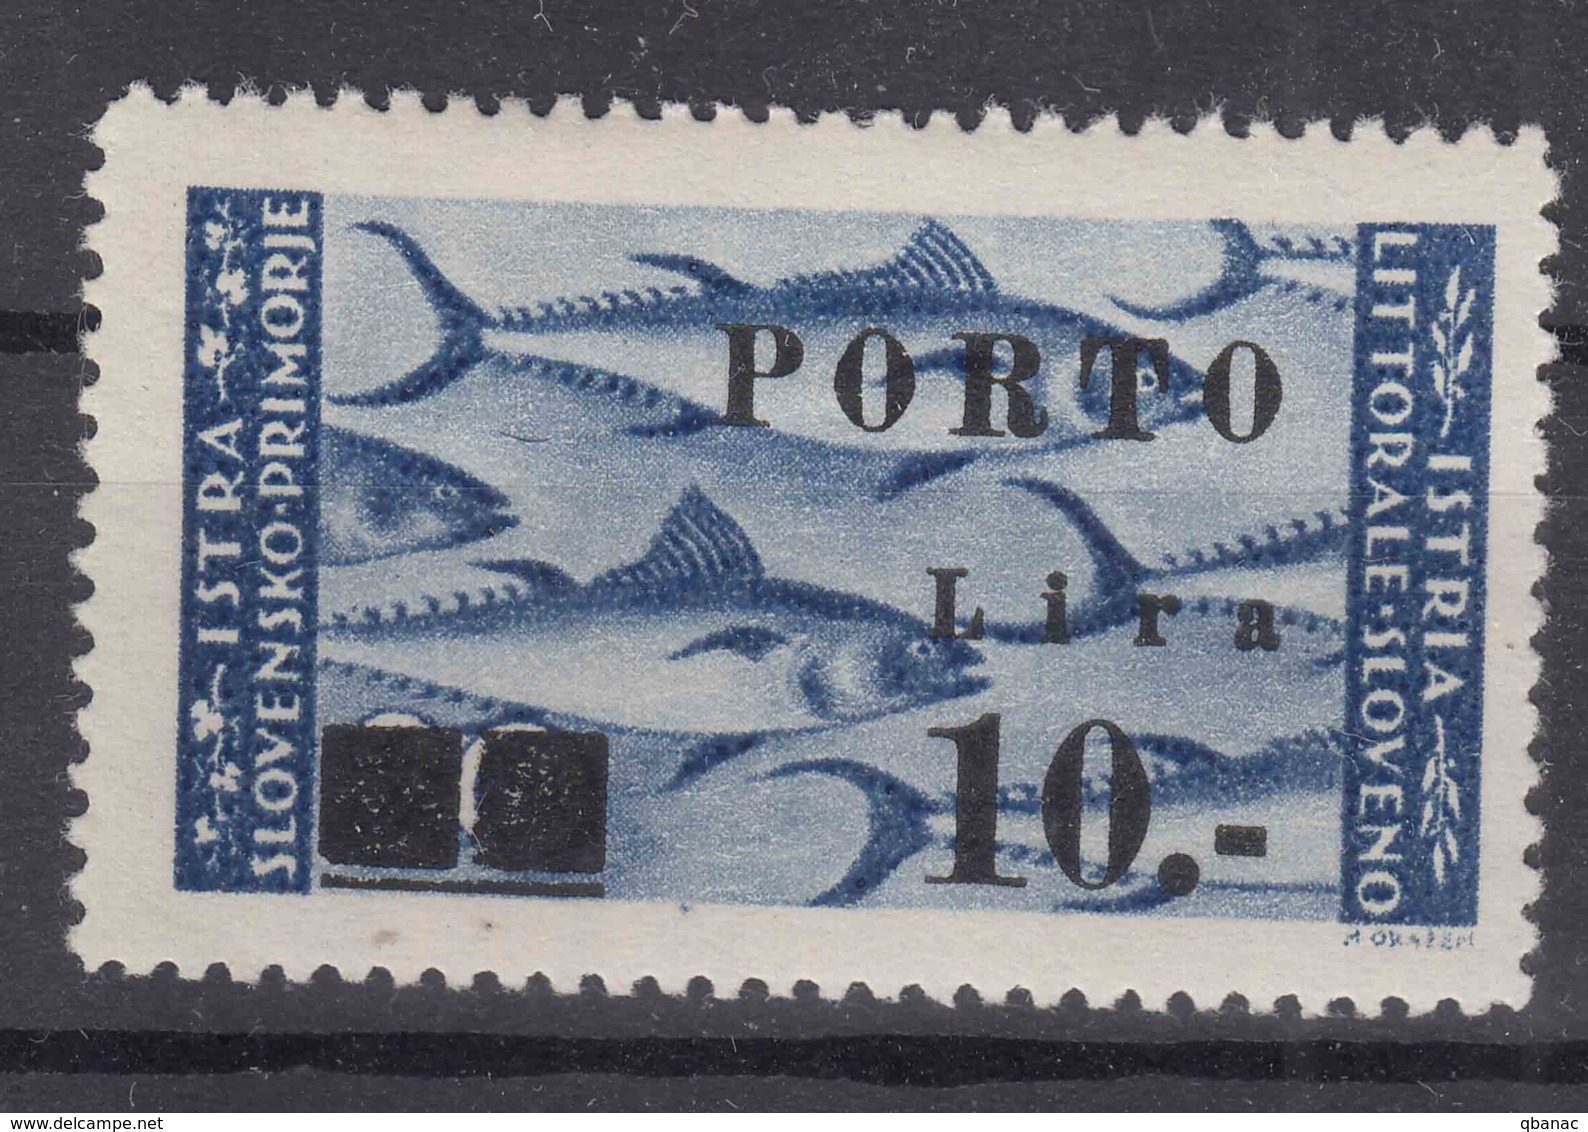 Istria Litorale Yugoslavia Occupation, Porto 1946 Sassone#17 Overprint II, Mint Hinged - Yugoslavian Occ.: Istria